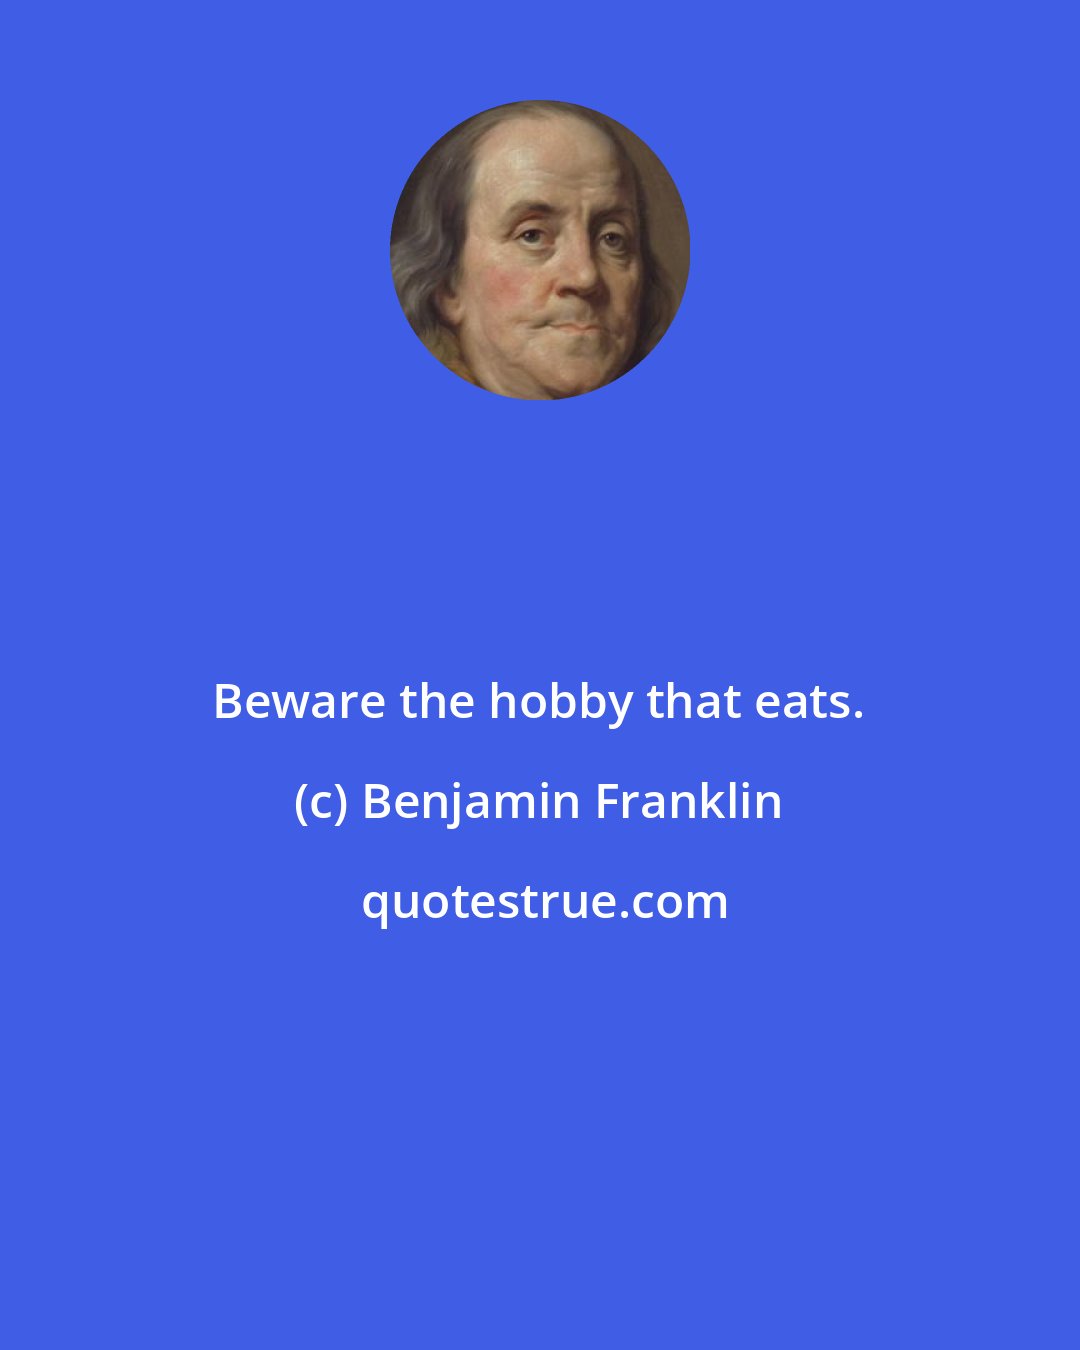 Benjamin Franklin: Beware the hobby that eats.